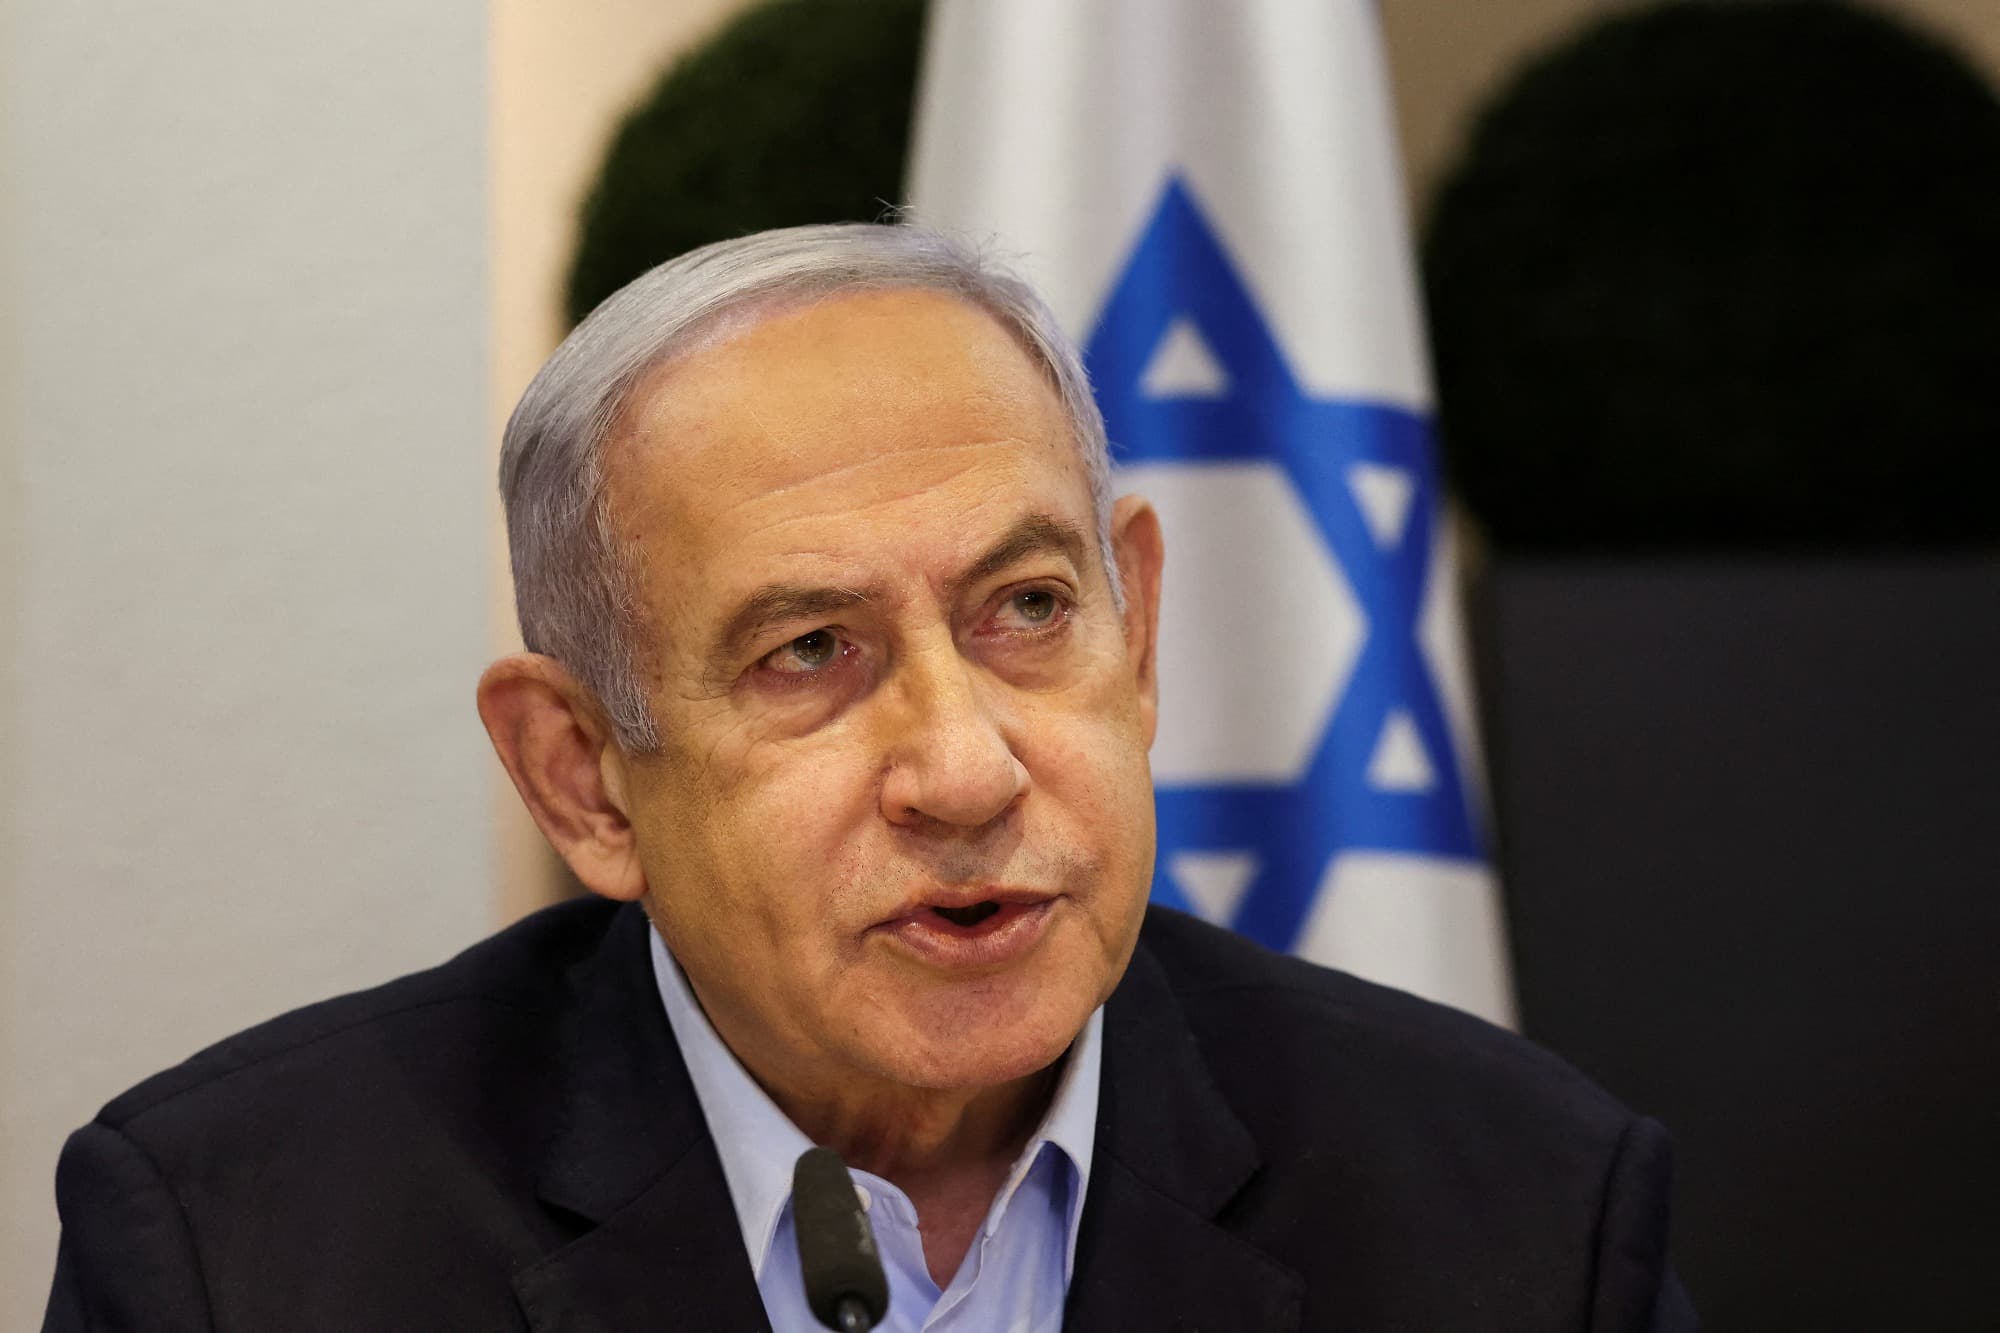 Izrael: "Dejali smo: Če Iran napade Izrael, bomo napadli Iran"